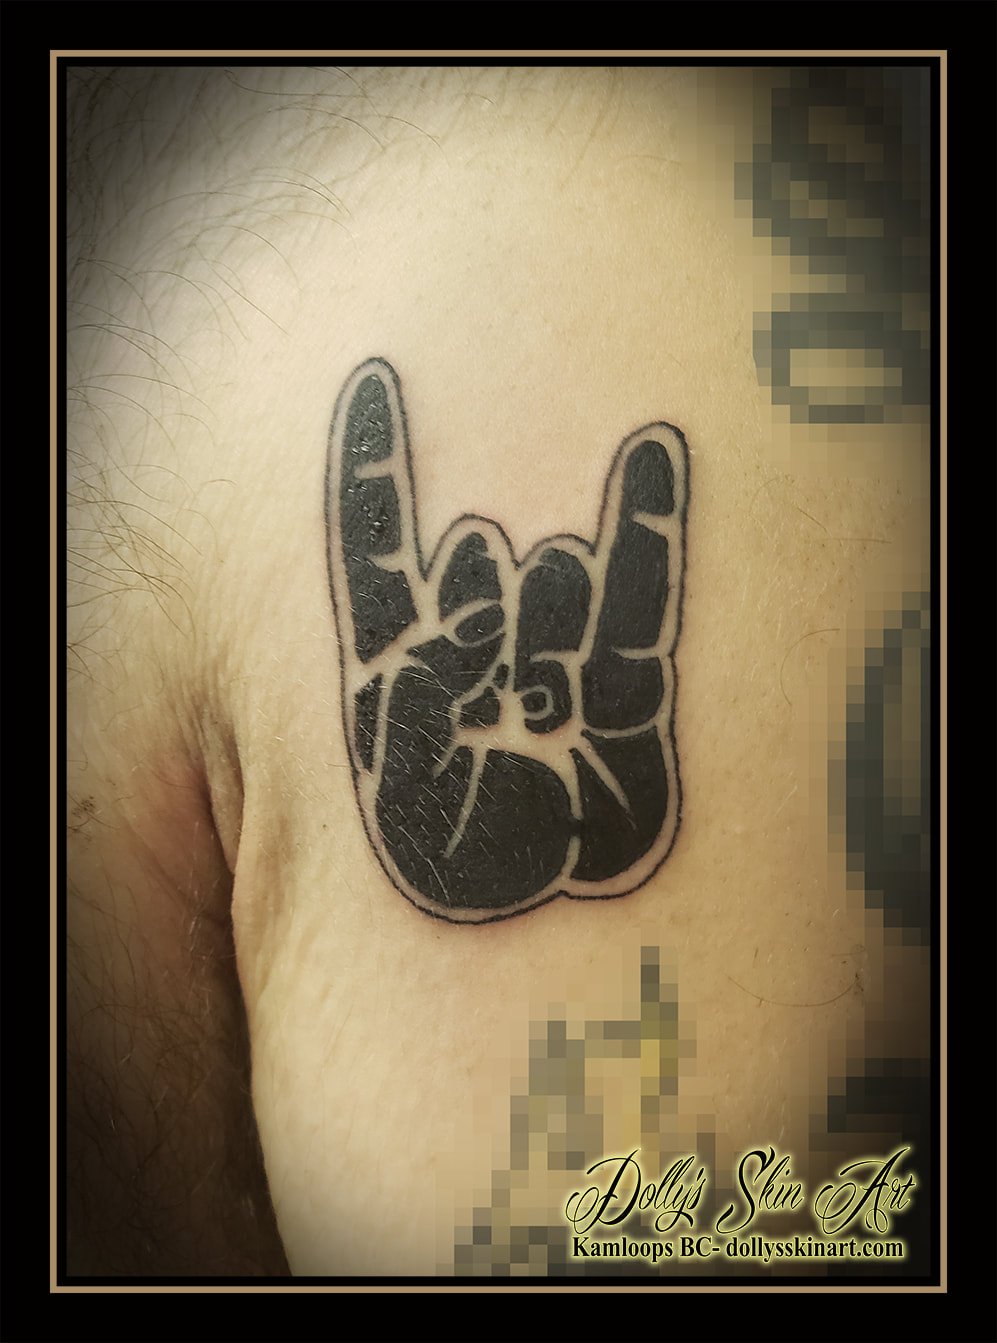 hand symbol tattoo horns black Sign of the Horns Devil Fingers Heavy Metal Rock On U+1F918 tattoo kamloops dolly's skin art